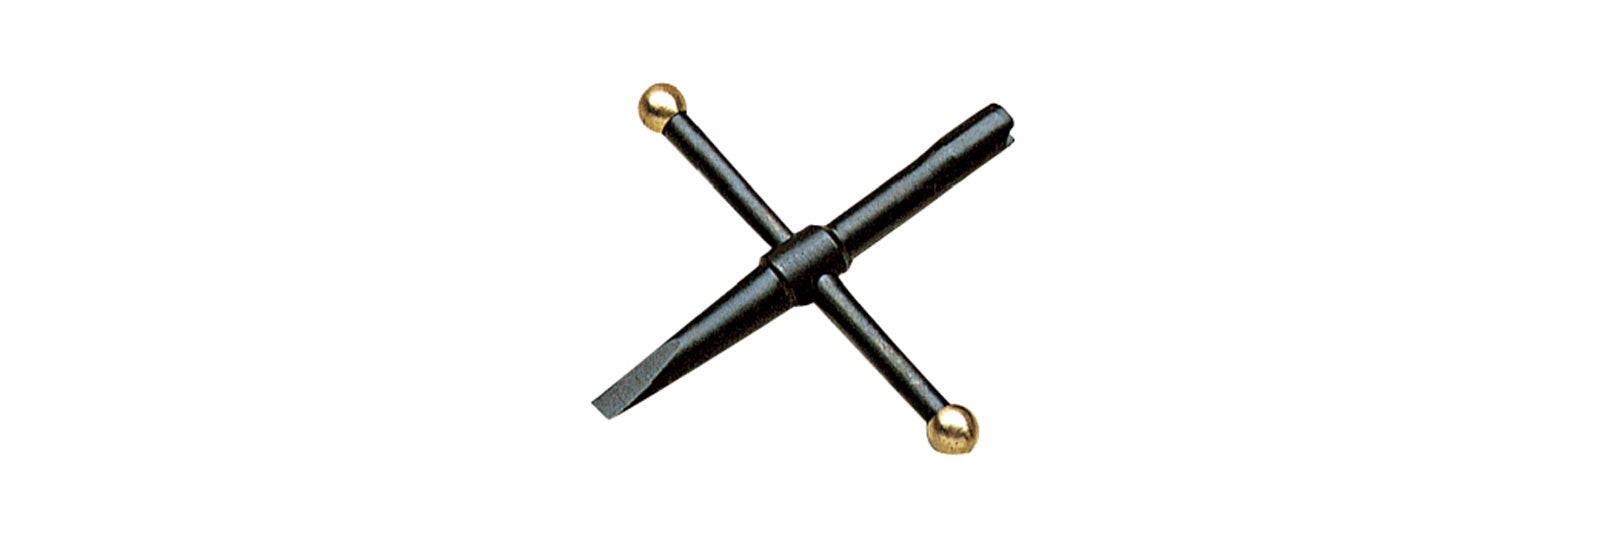 Cruciform nipple wrench